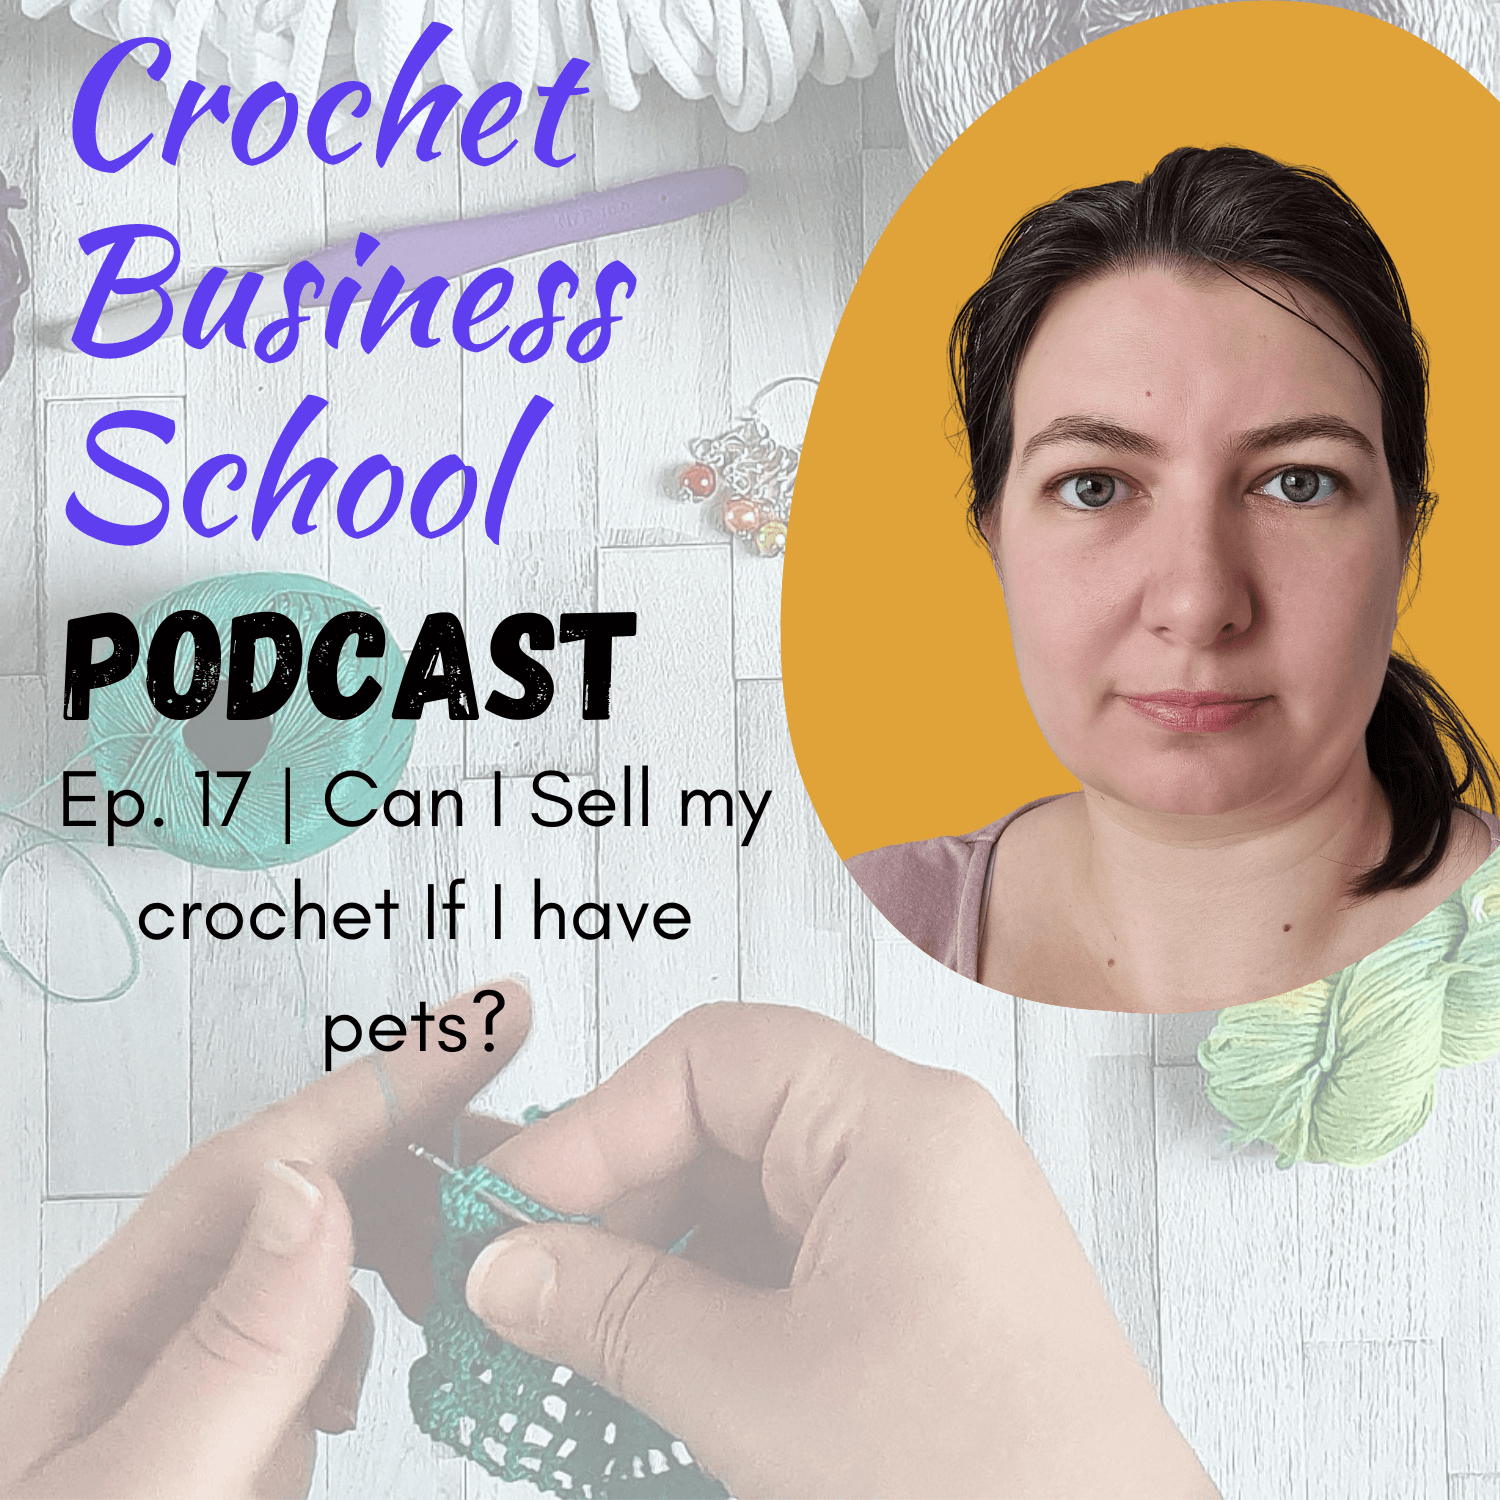 Artwork for podcast The Crochet Business School Podcast